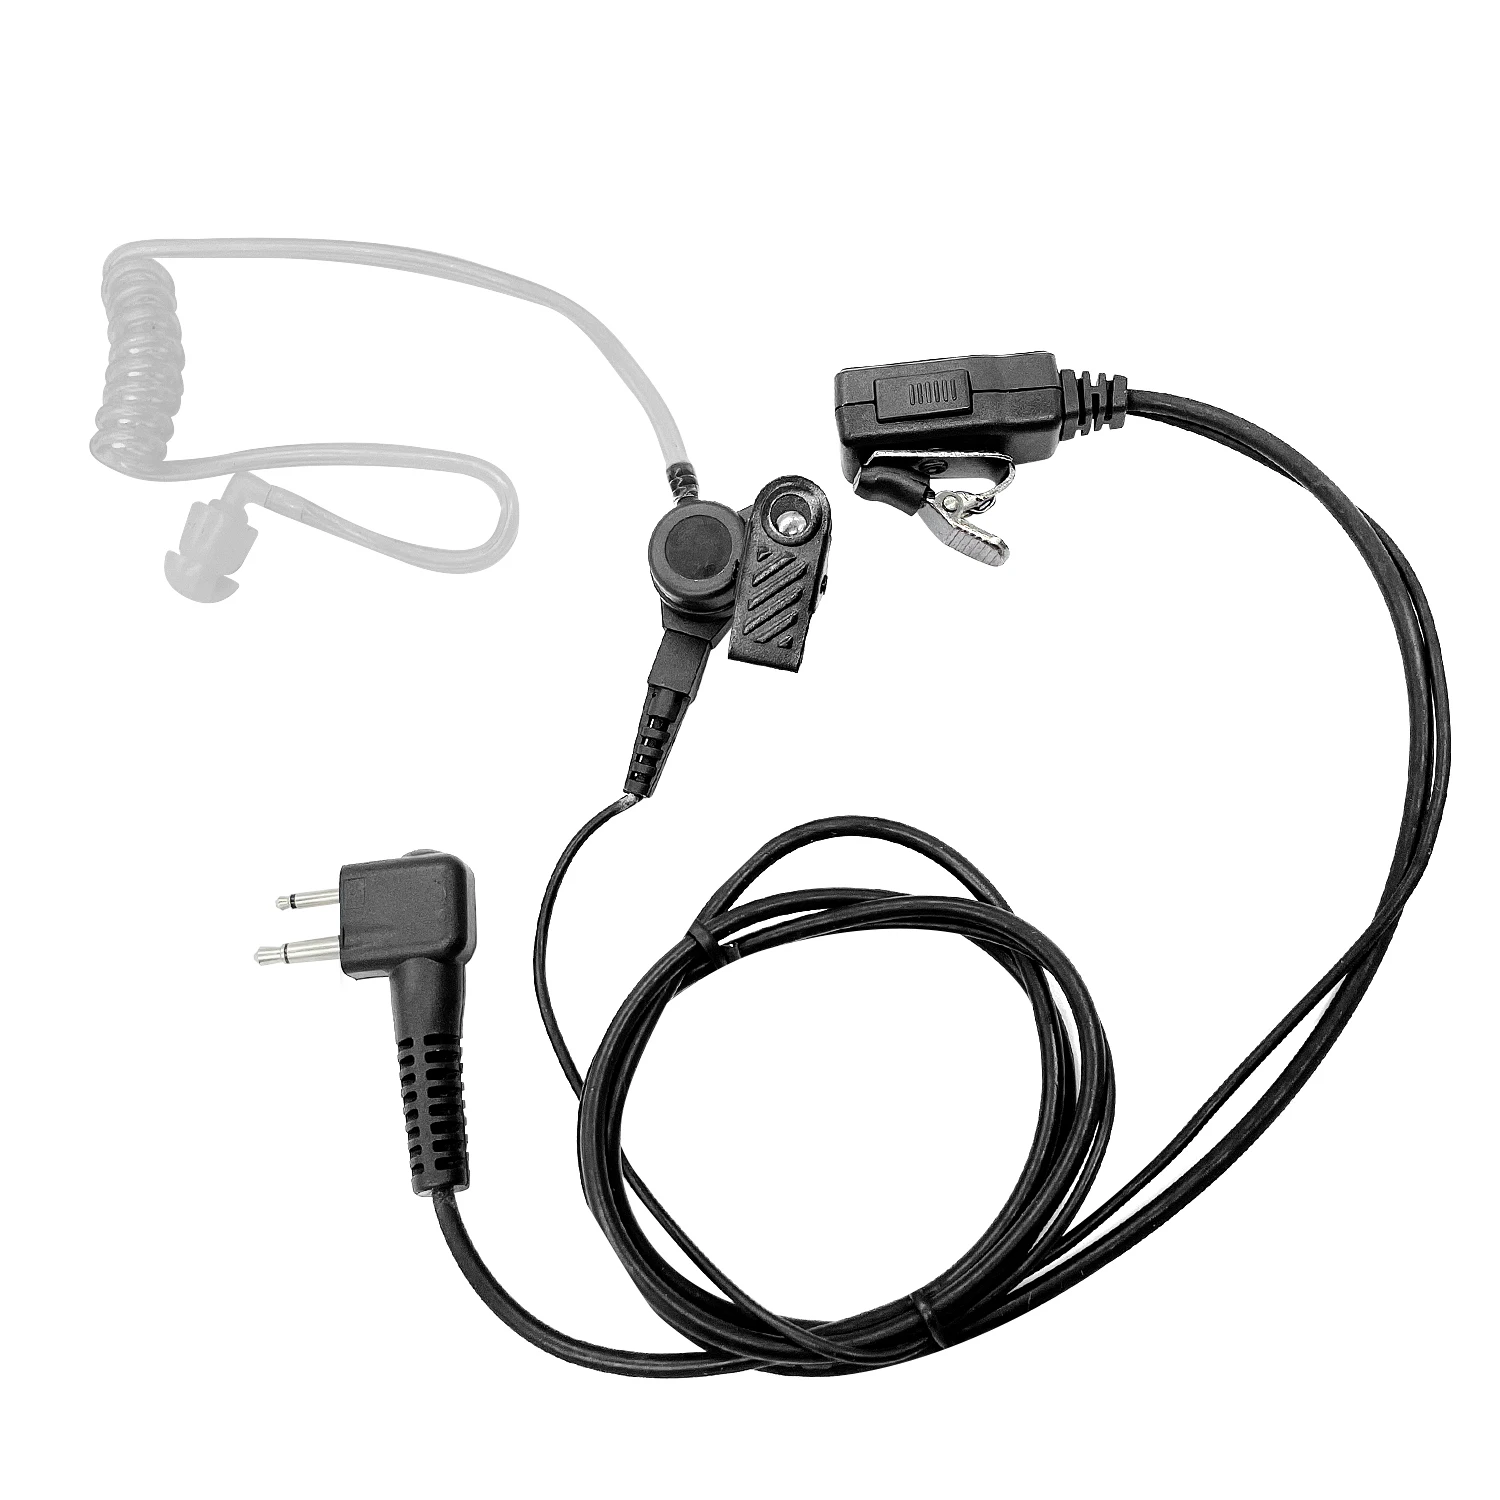 Walkie Talkie Earpiece, Compatible with Motorola CP010,CP140,GP68,EP450,DEP450,CT150, 250,450LS, Two Way Radio receiver earphone walkie talkie accessories earpiece microphone headset for motorola cp010 cp140 gp68 ep450 dep450 ct150 250